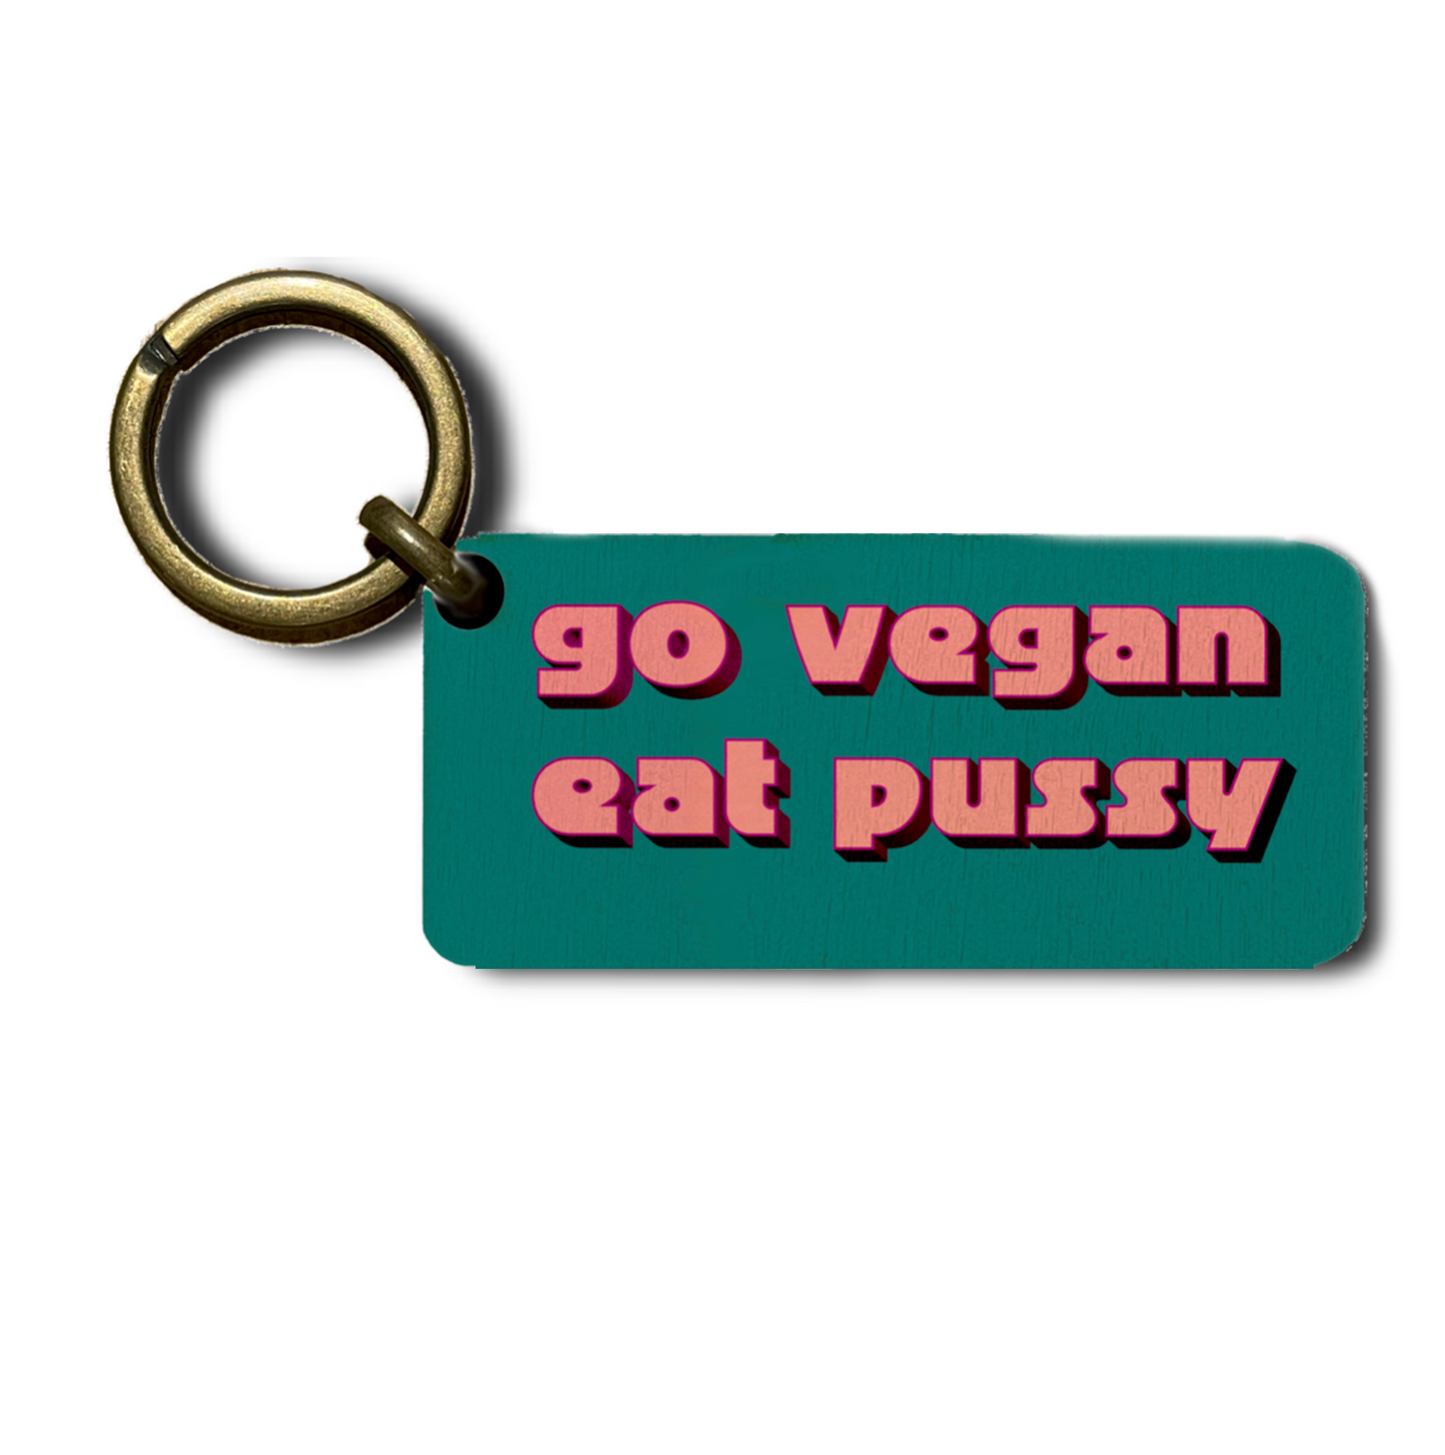 Portachiavi Go Vegan Eat Pussy